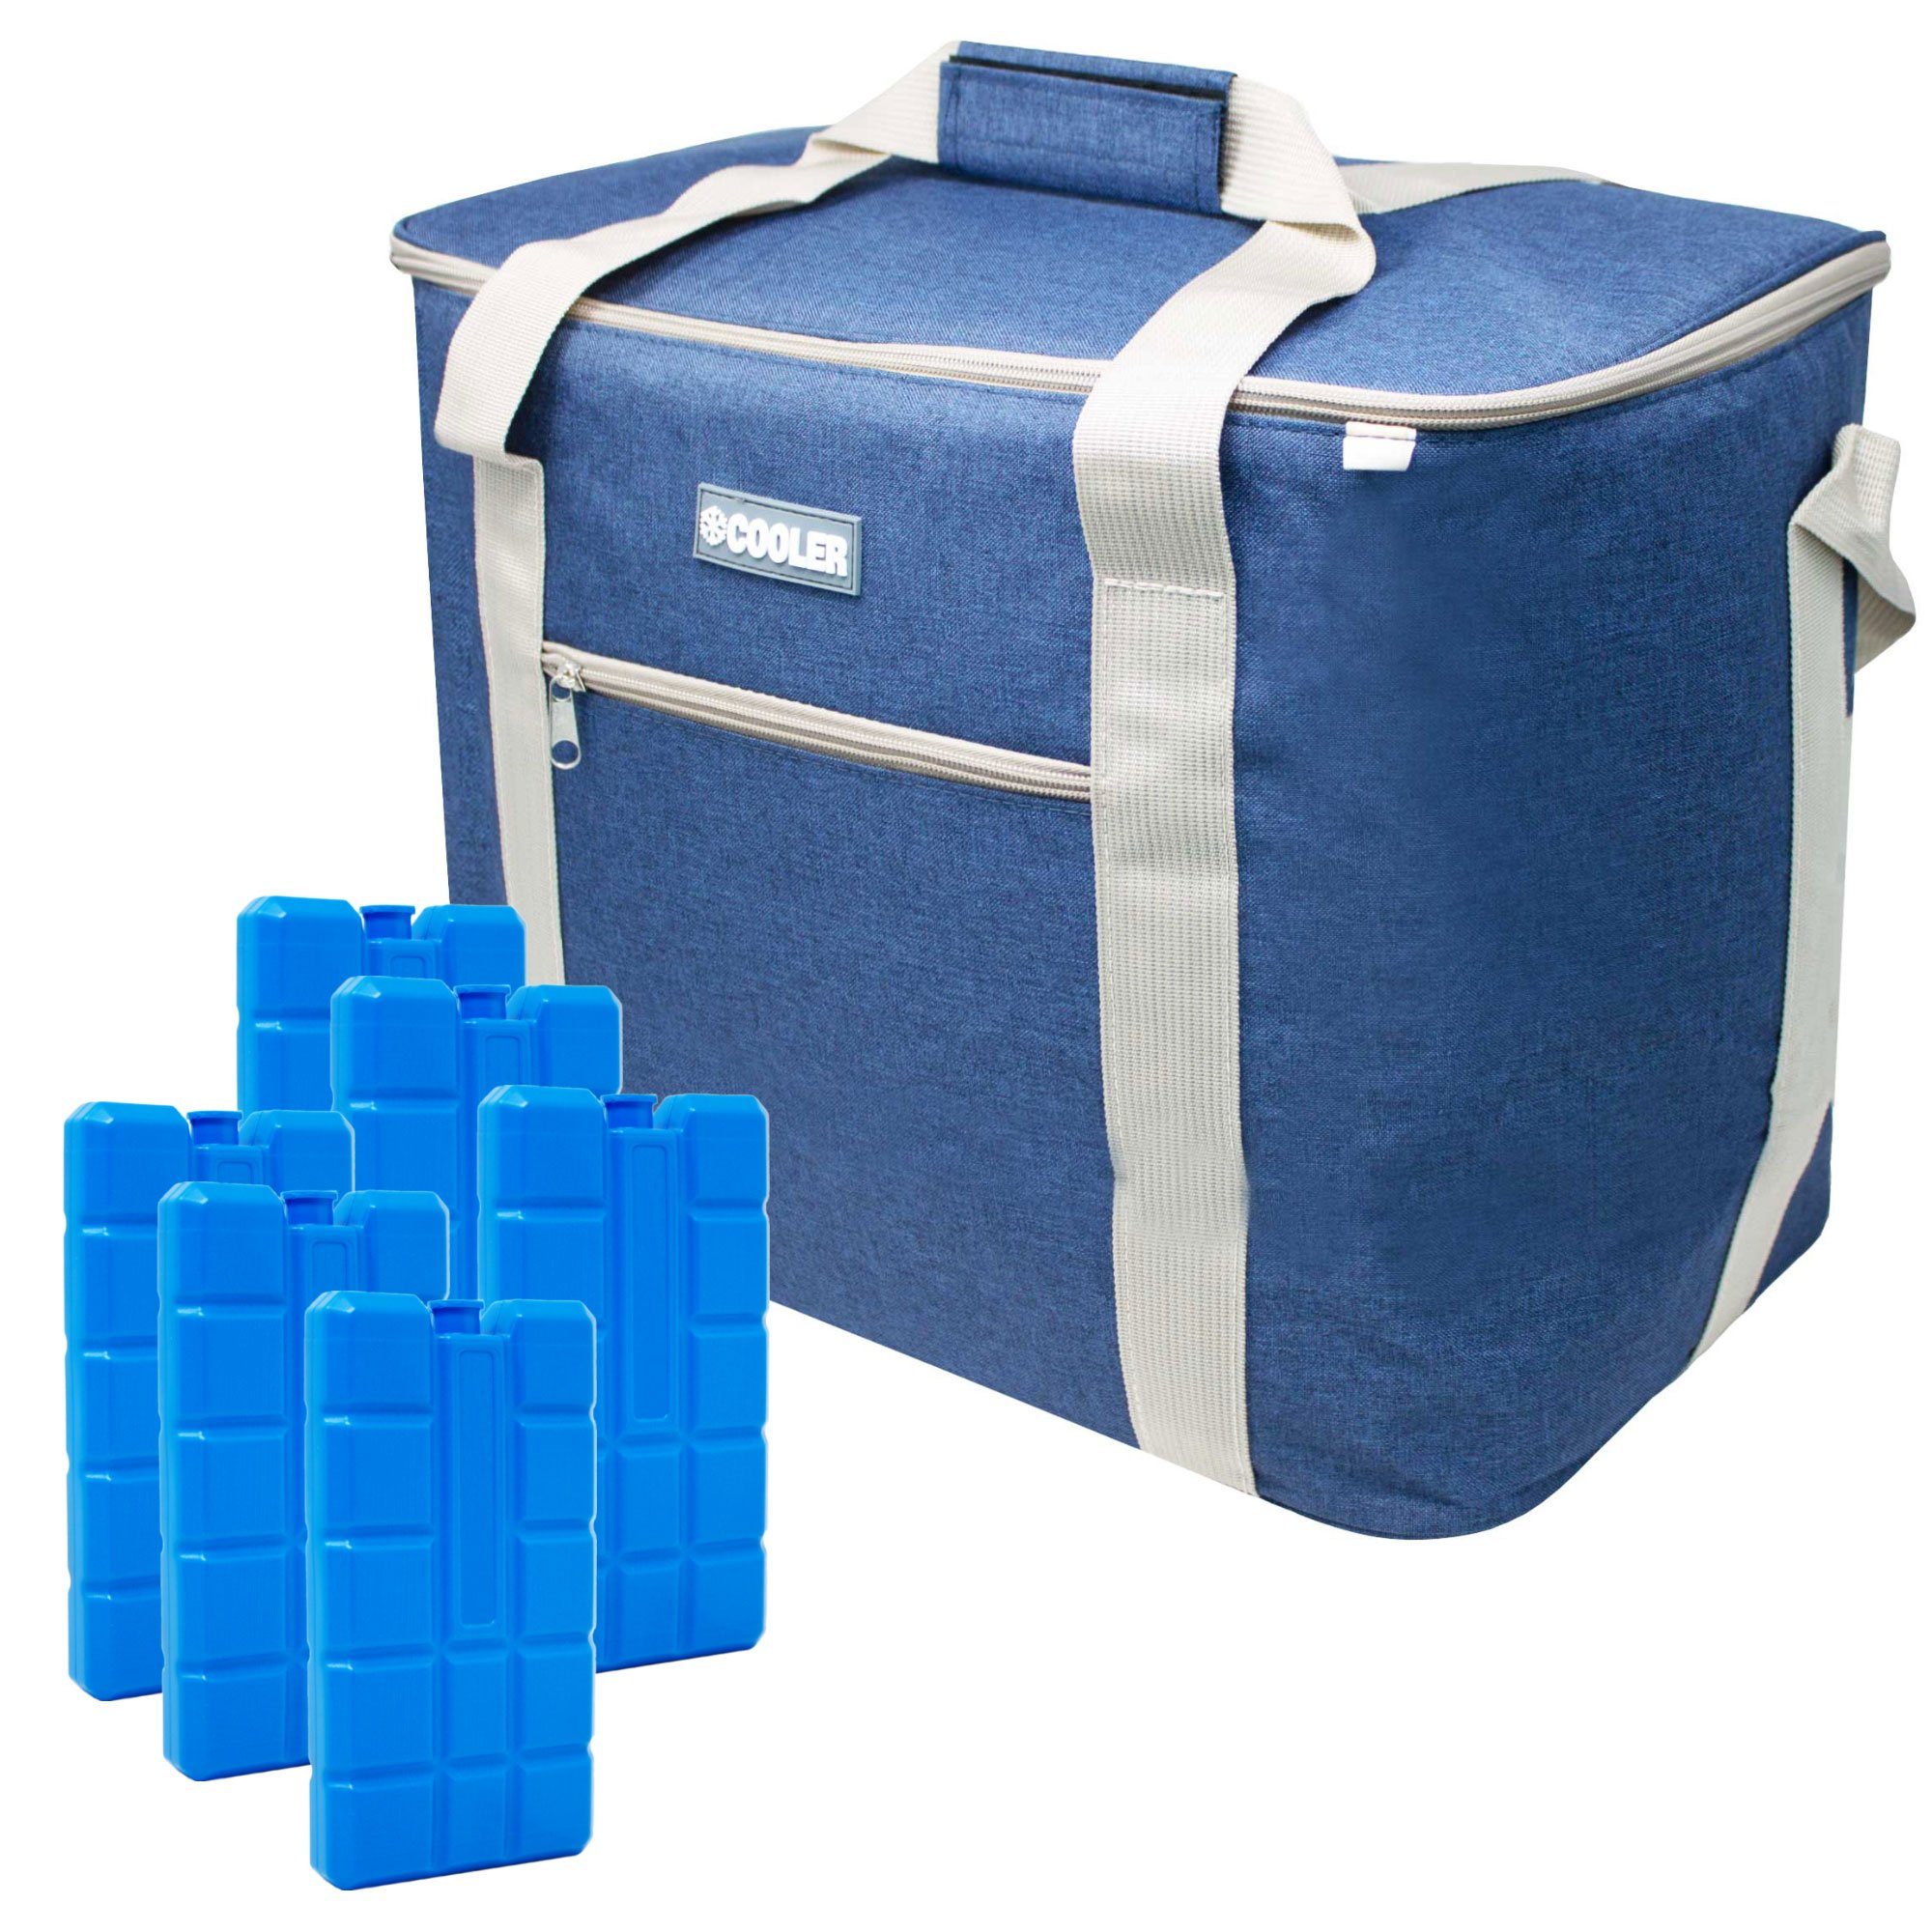 ToCi Kühltasche 36 Liter große Kühltasche Kühlbox Navy-Blau mit 6er-Set  Kühlakkus | Kühlboxen